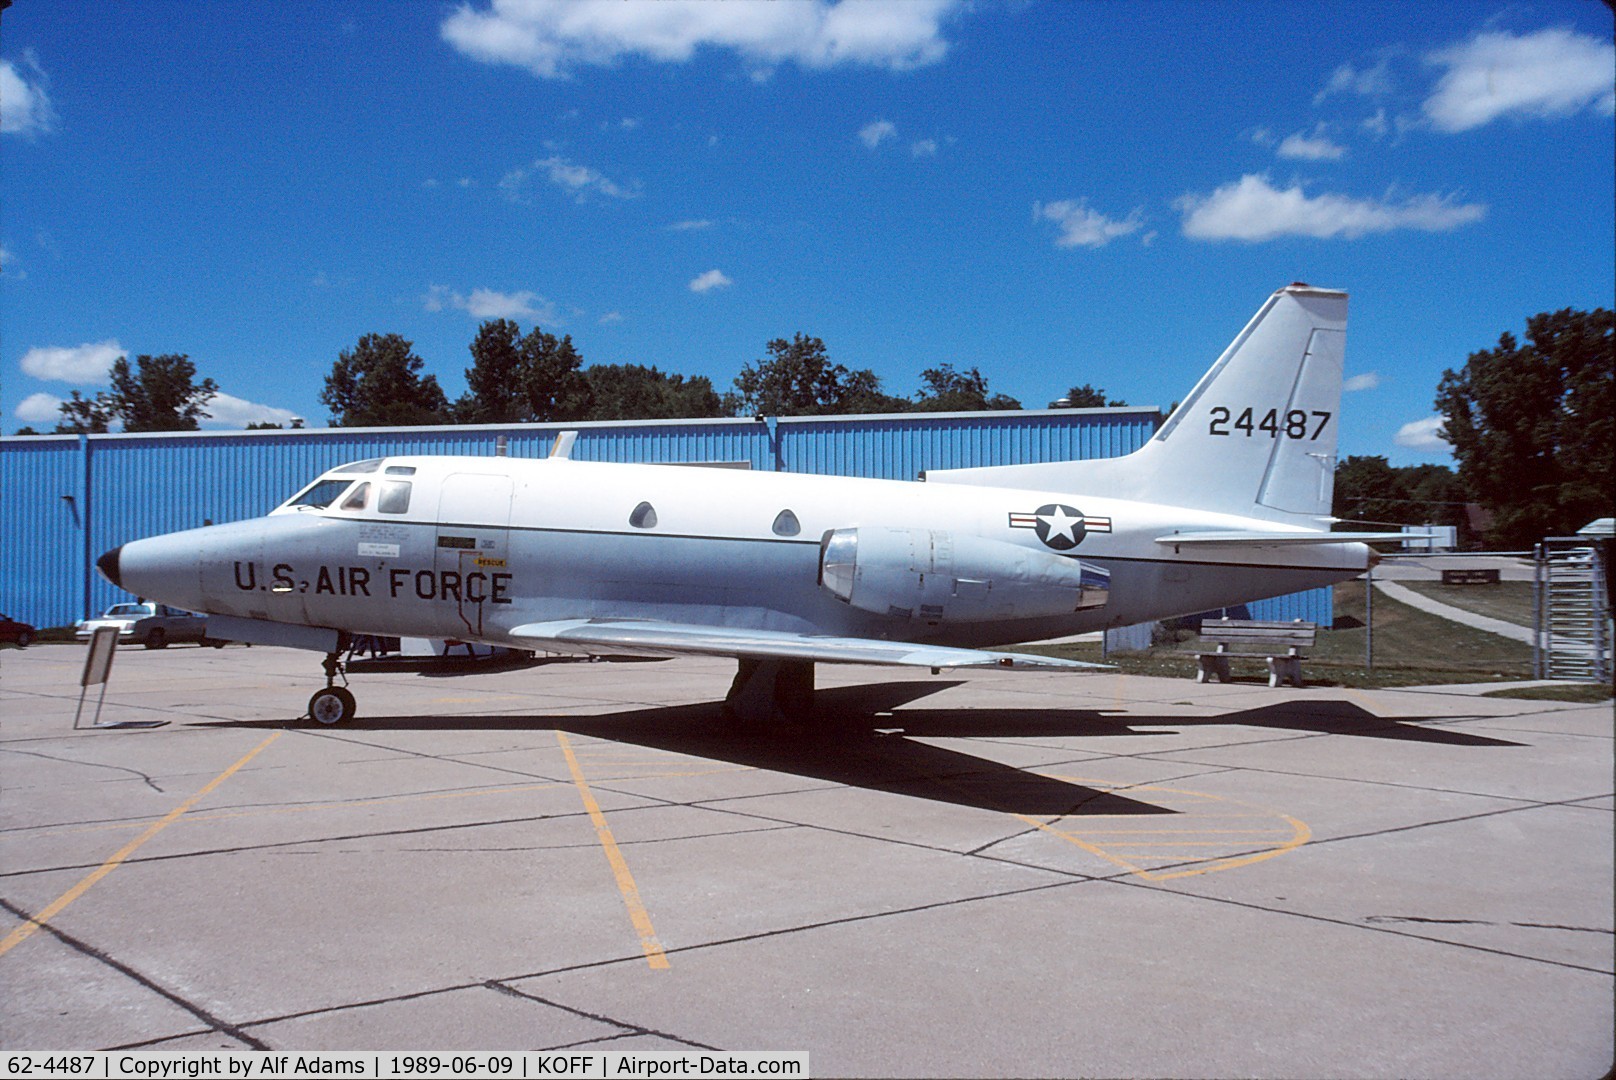 62-4487, 1962 North American CT-39A Sabreliner C/N 276-40, At the old Strategic Air Command Museum, Omaha, Nebraska in 1989.